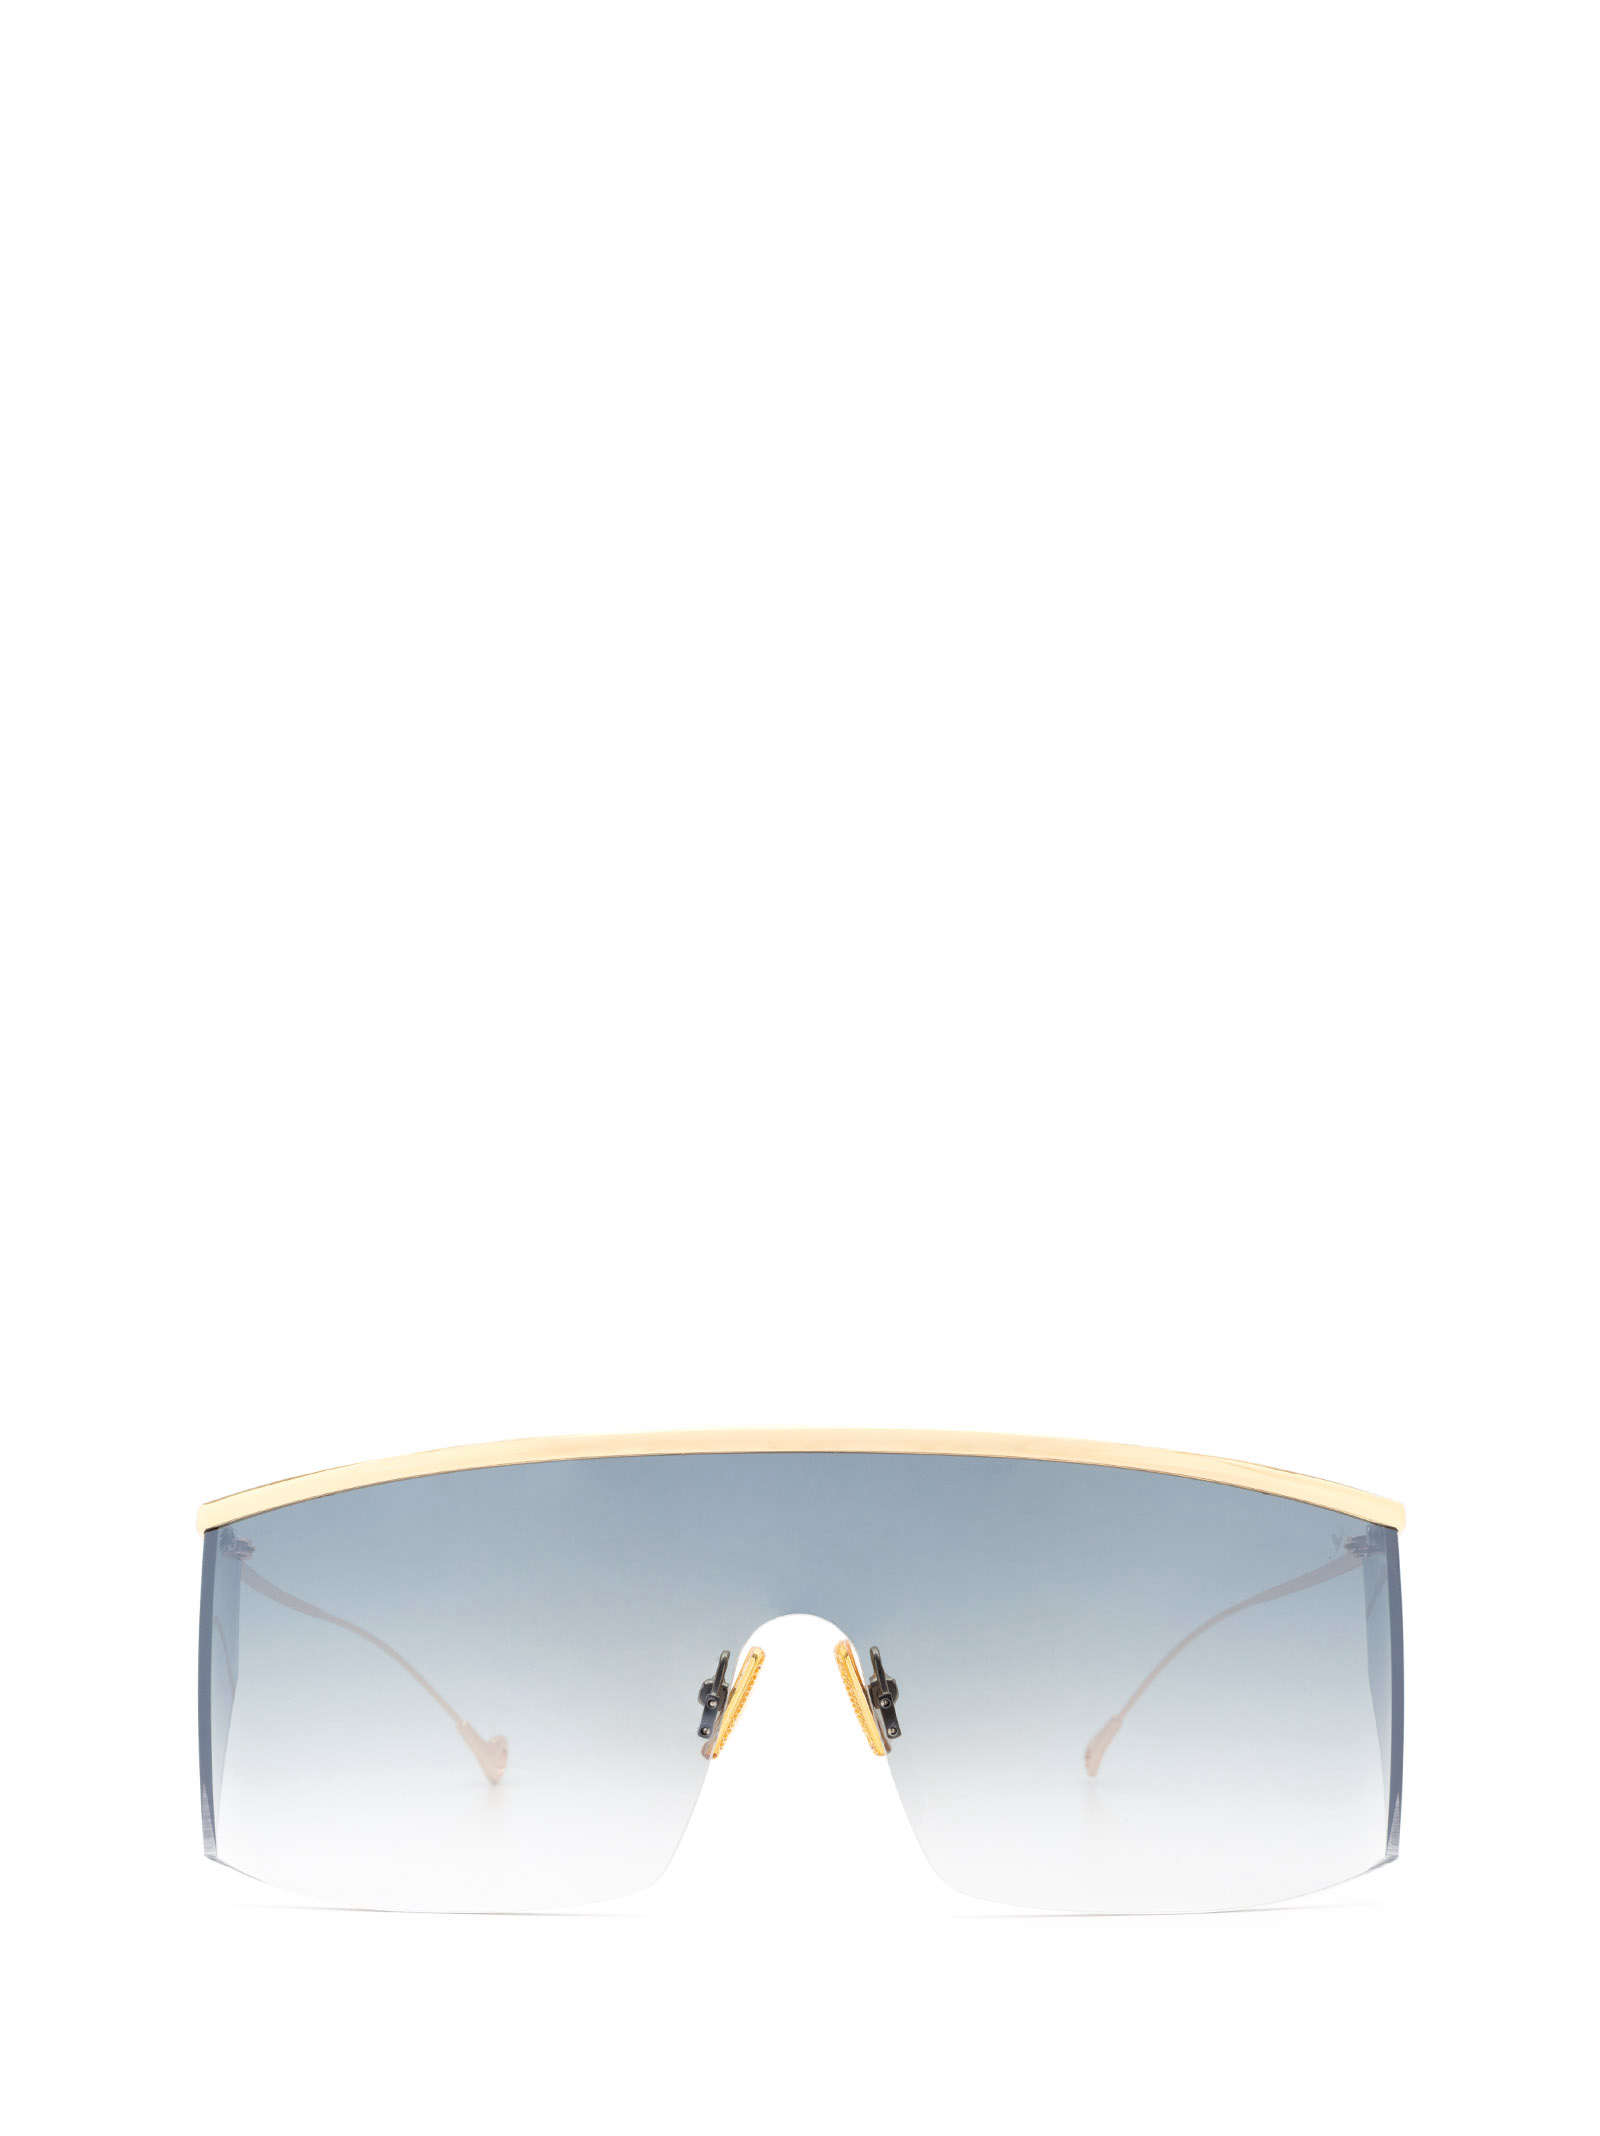 Karl Gold Sunglasses